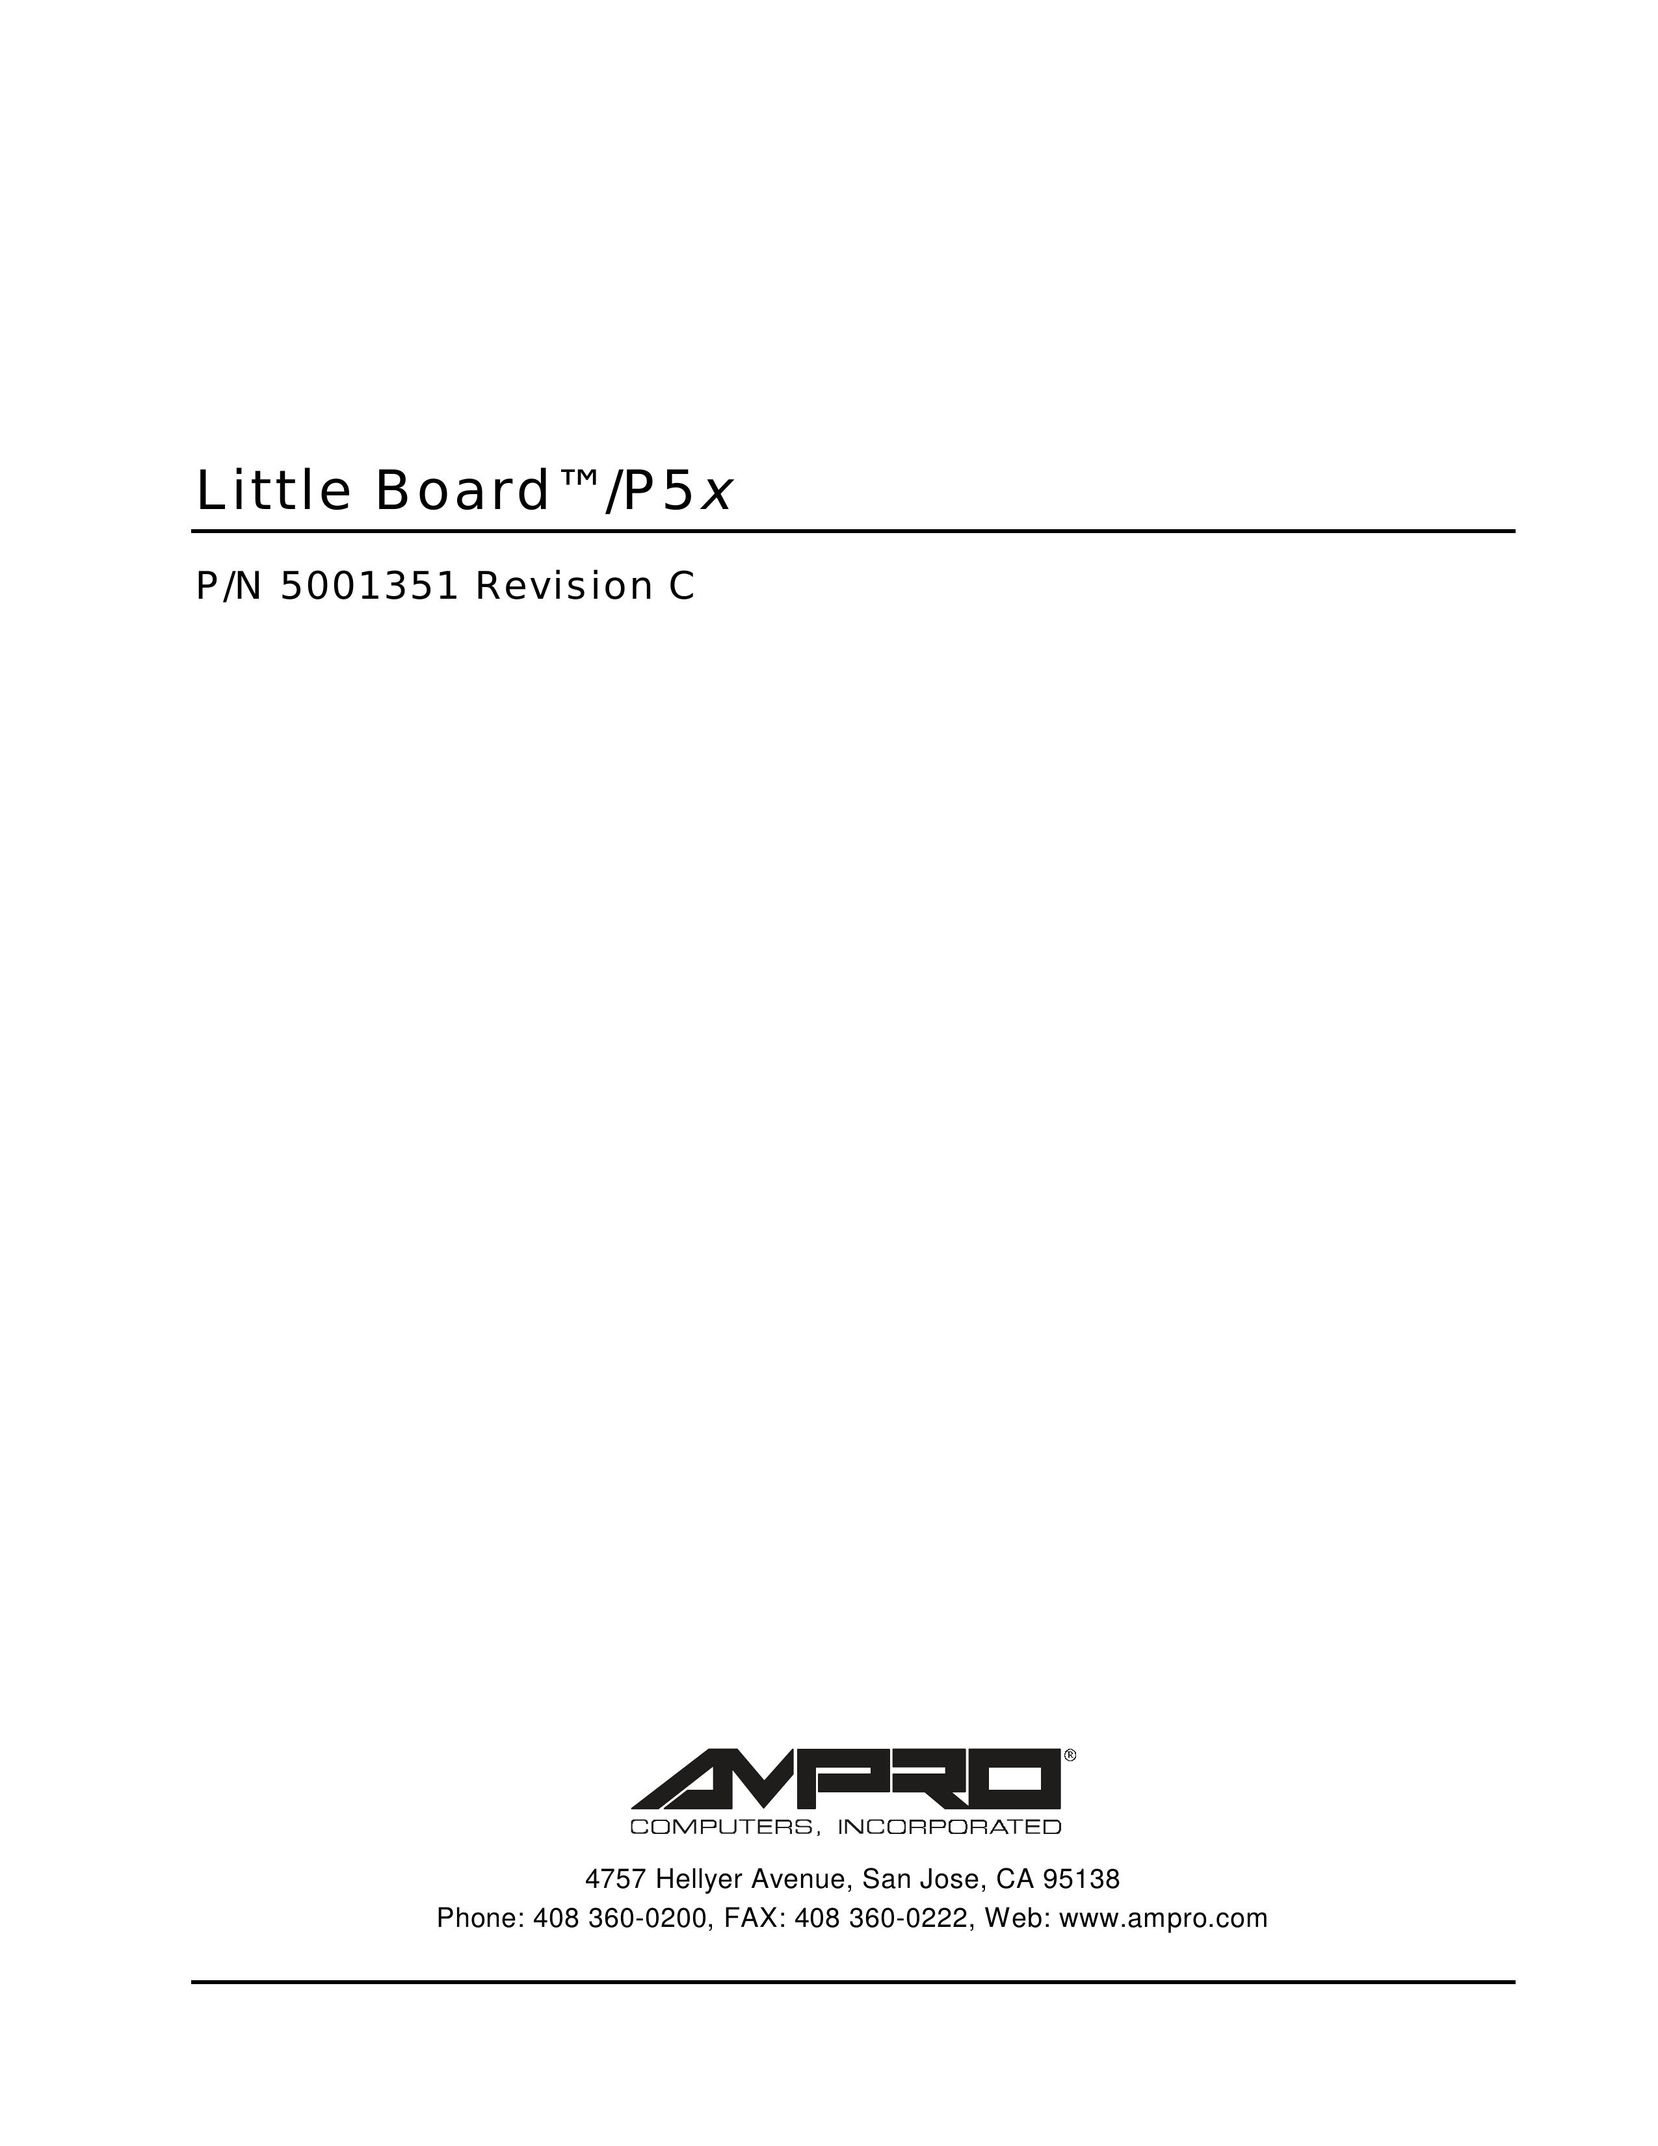 Ampro Corporation P5X Computer Hardware User Manual